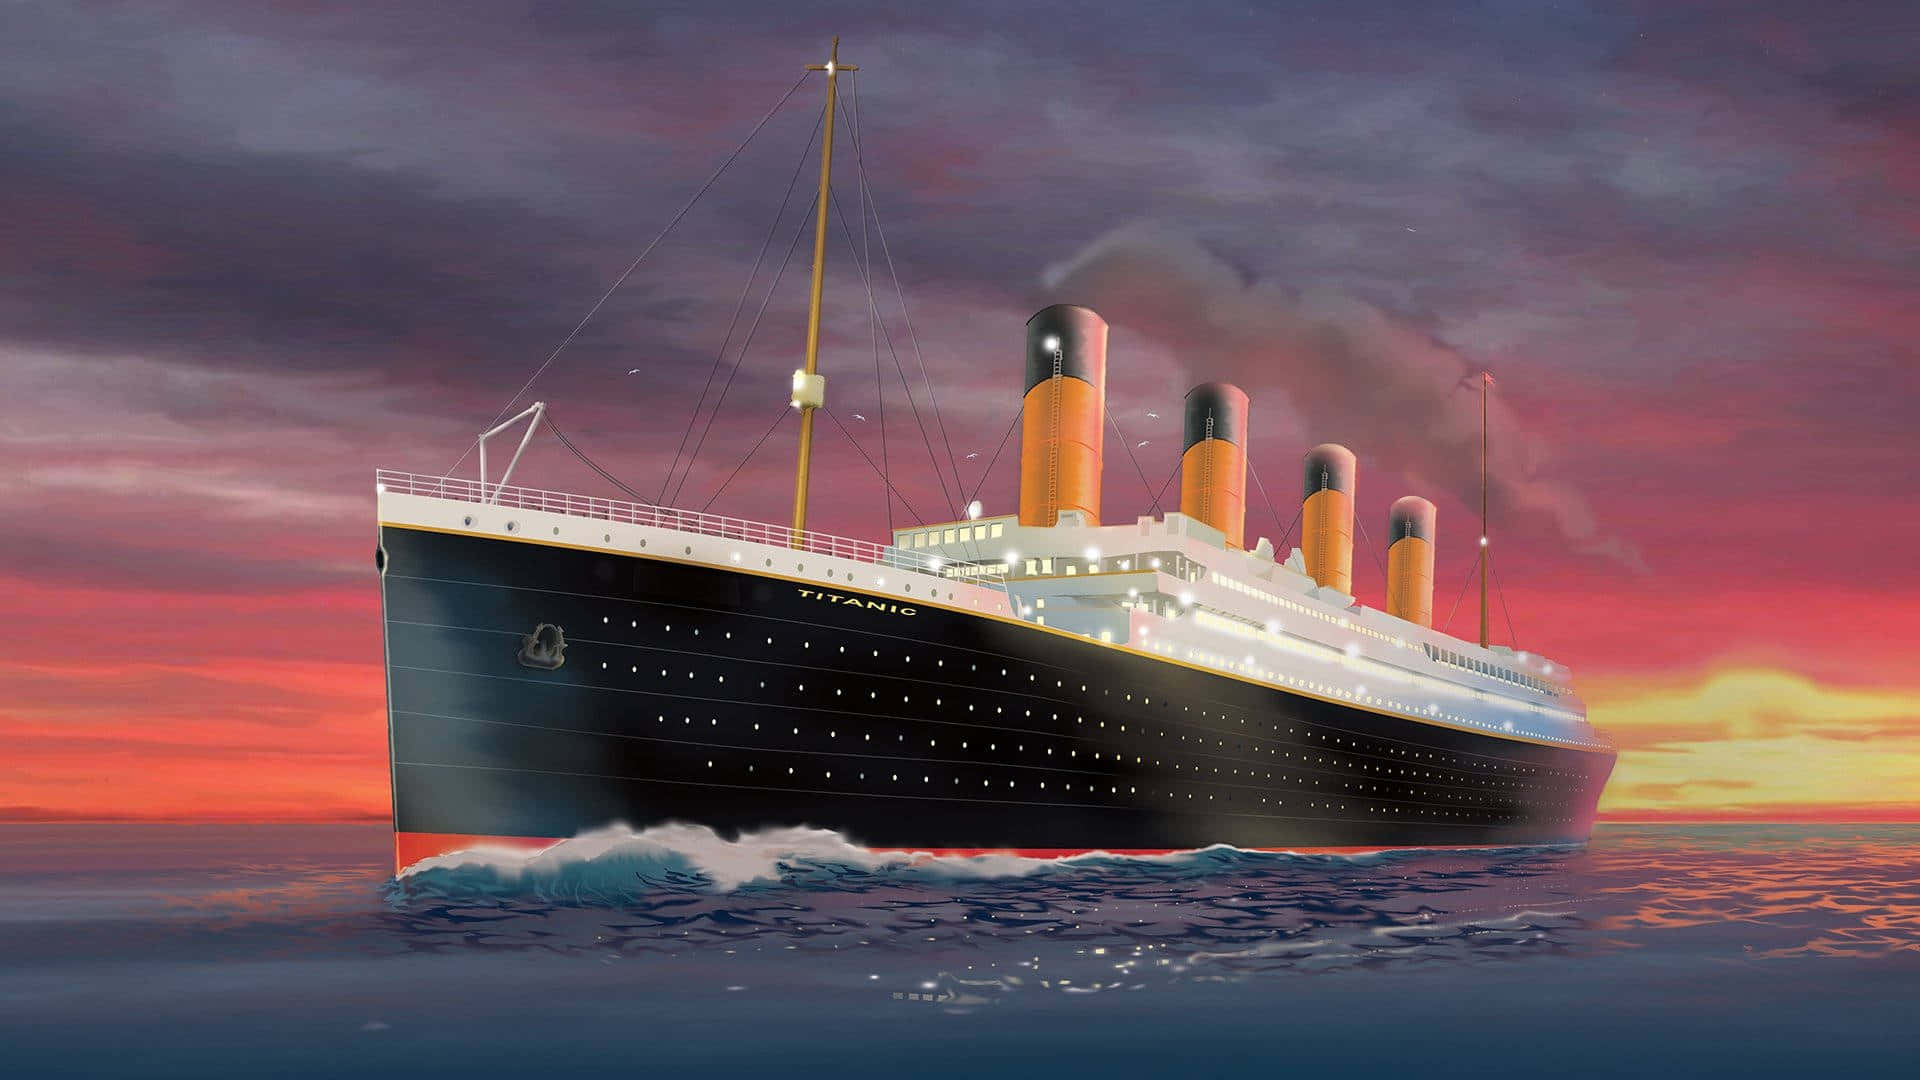 Elemblemático Barco De Crucero, El Titanic.